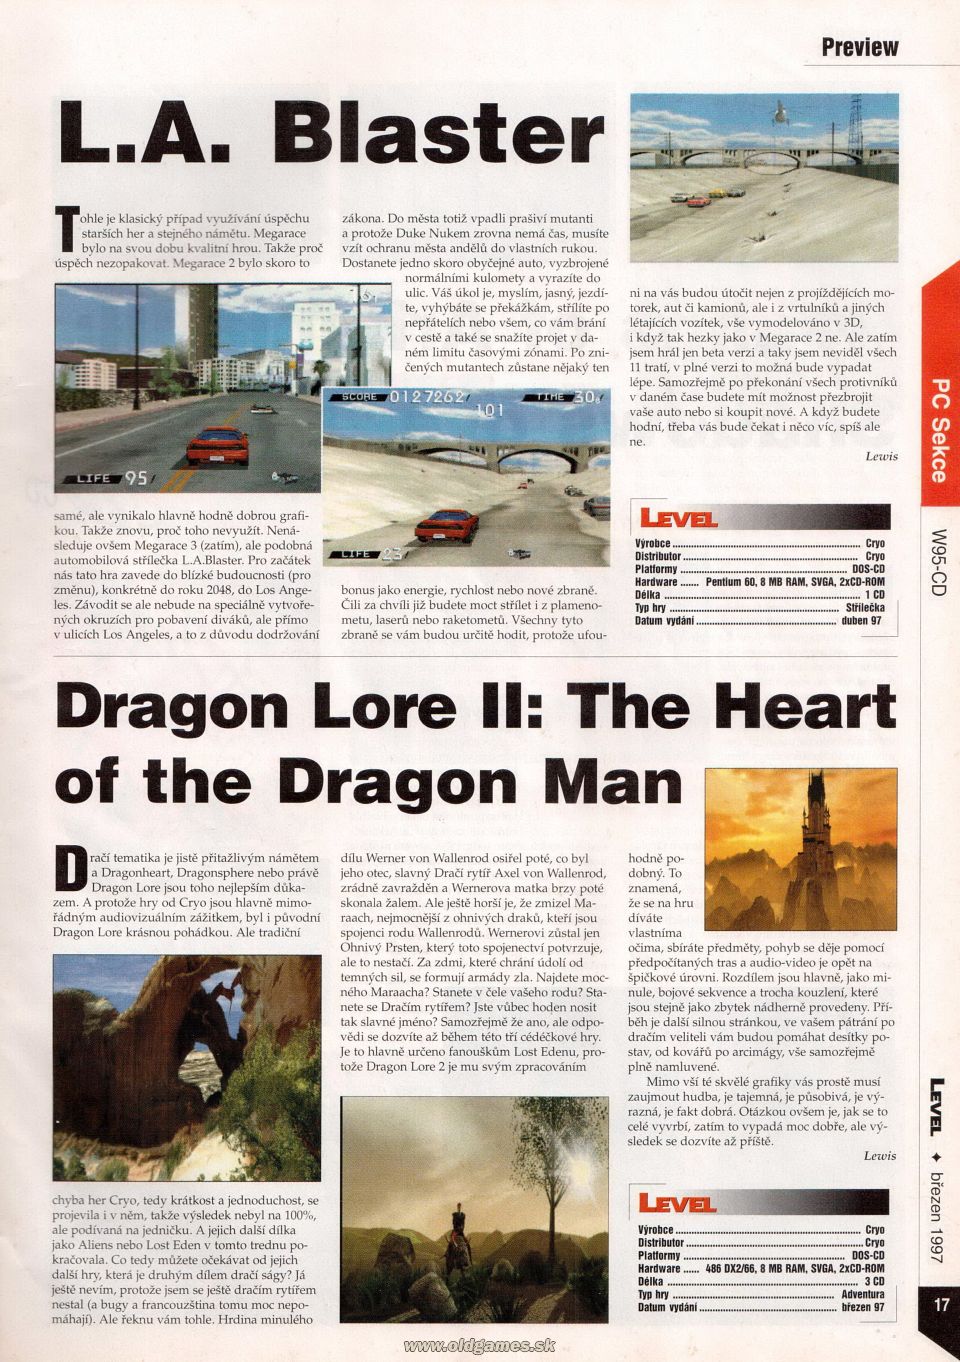 Preview: L.A. Blaster, Dragon Lore II